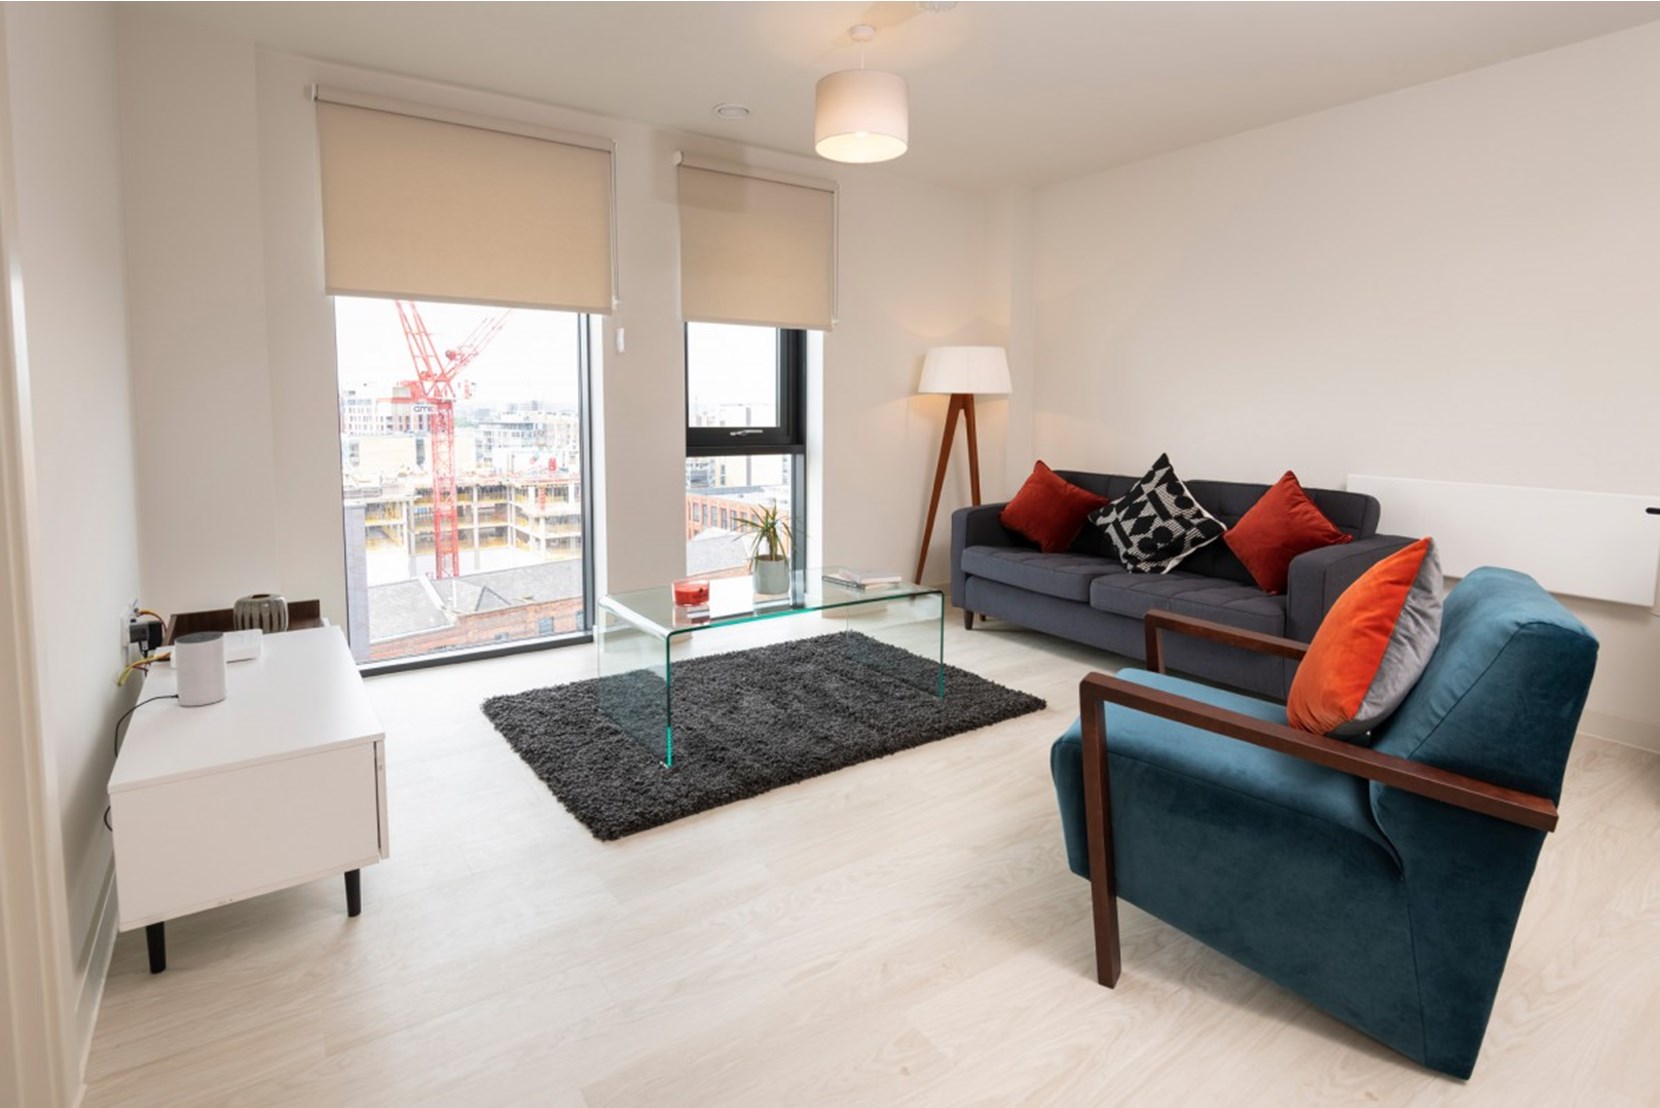 Apartment-Allsop-The-Trilogy-Manchester-interior-living-room